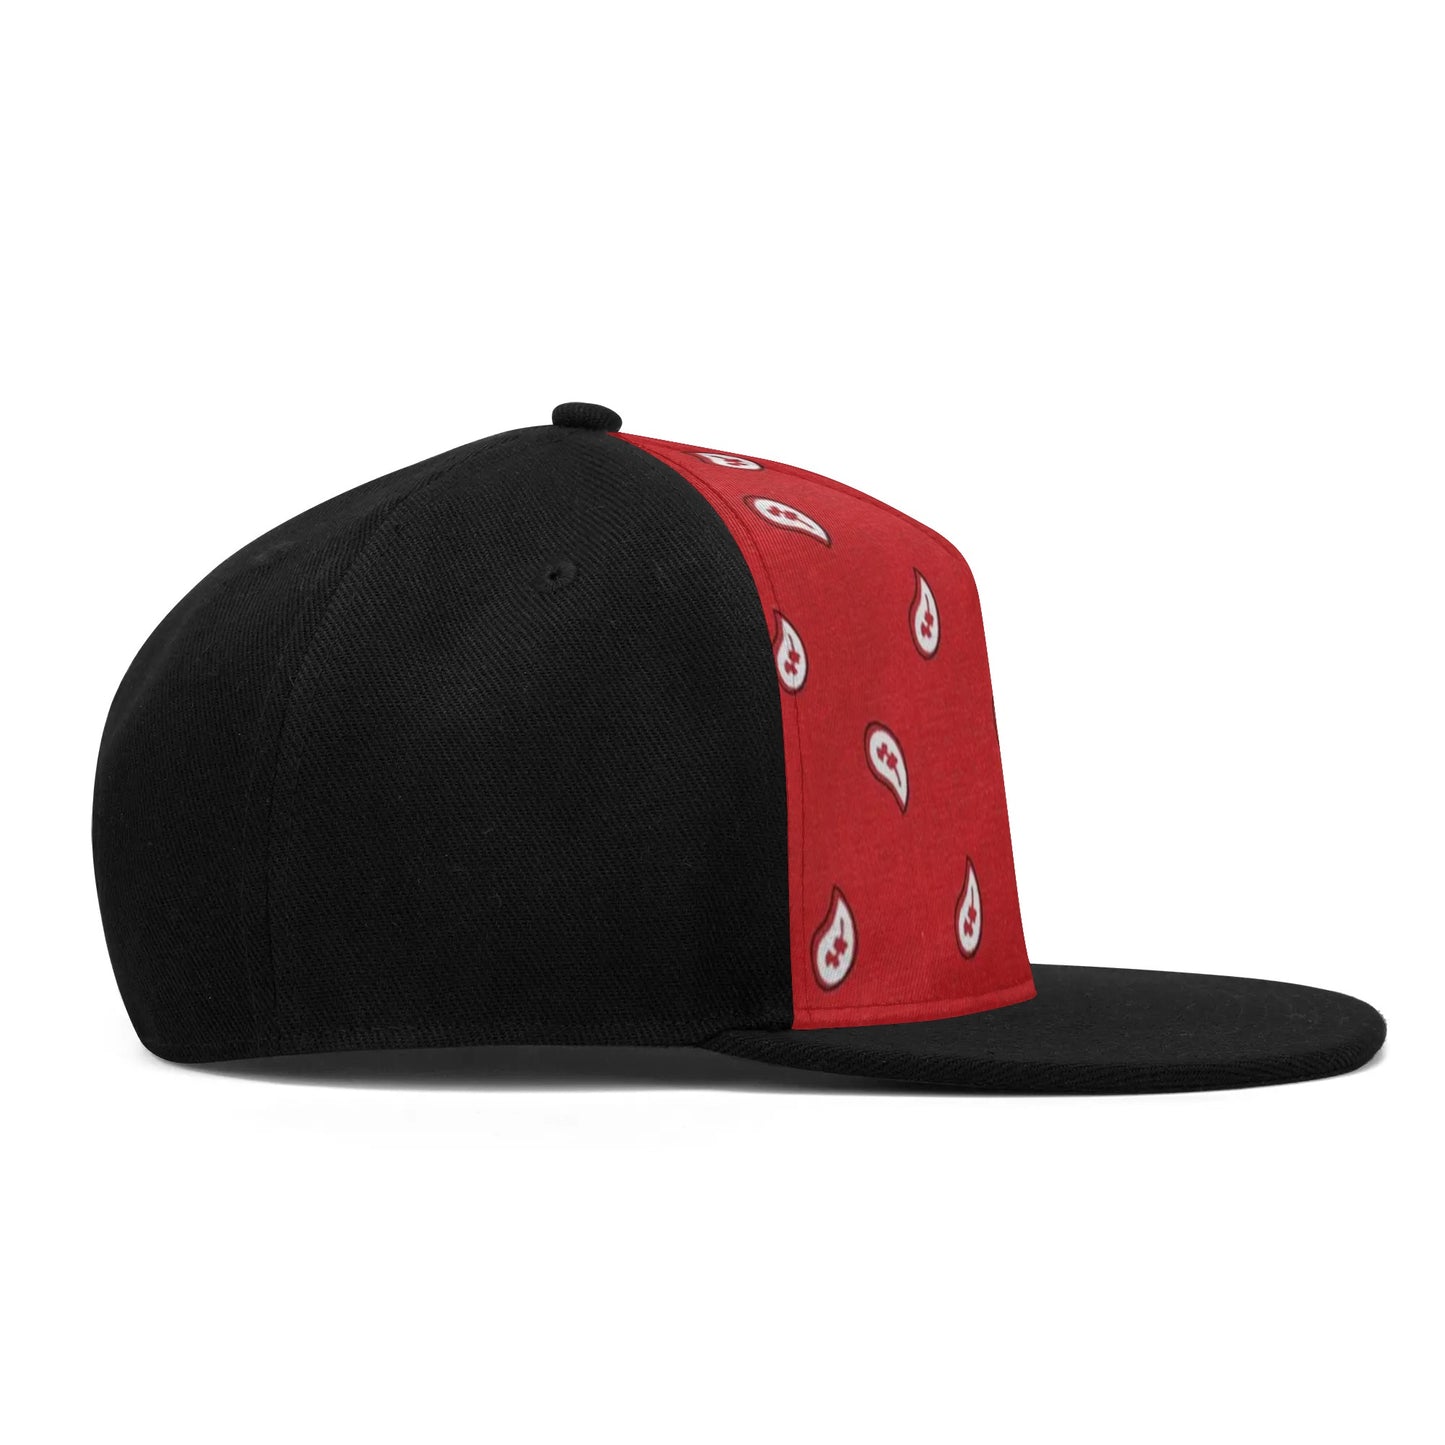 Red Bandana Snapback Hat